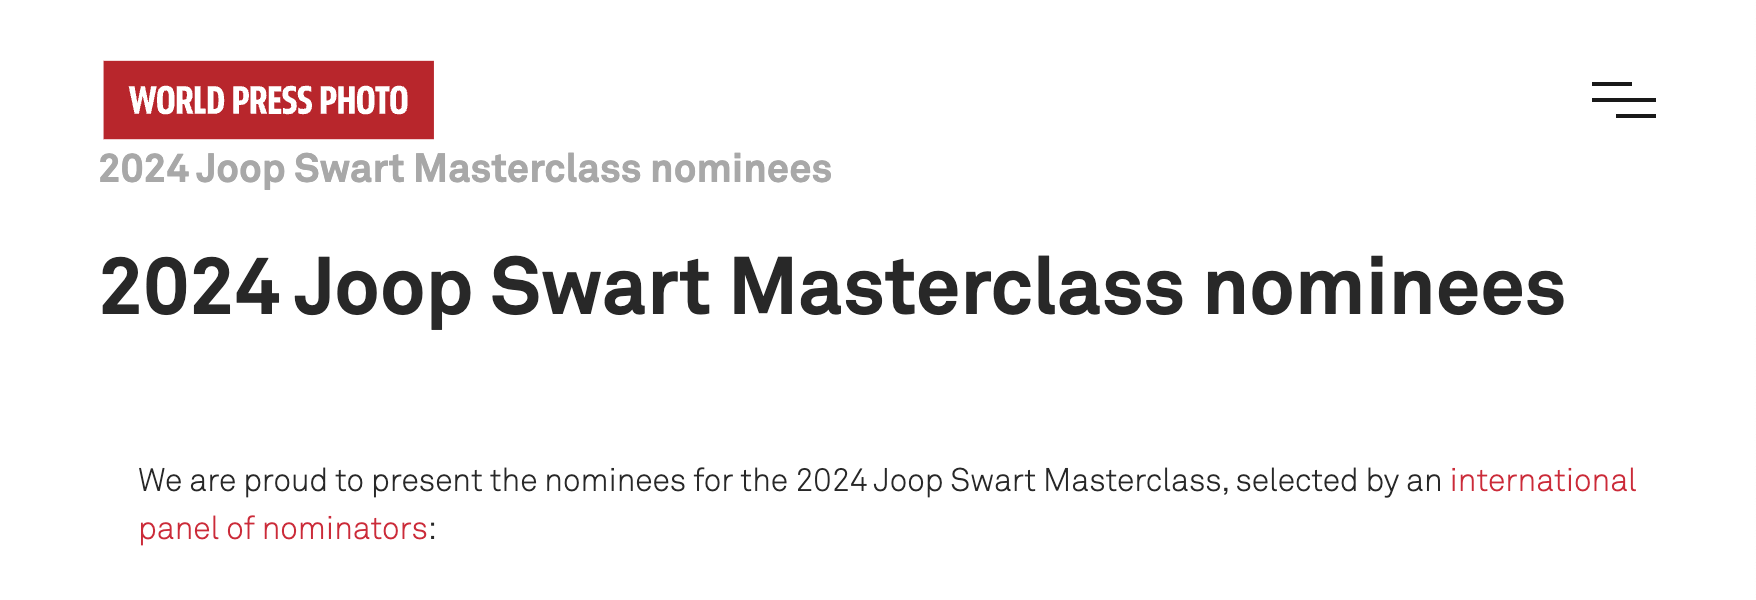 Nominated for 2024 World Press Photo's Joop Swart Masterclass